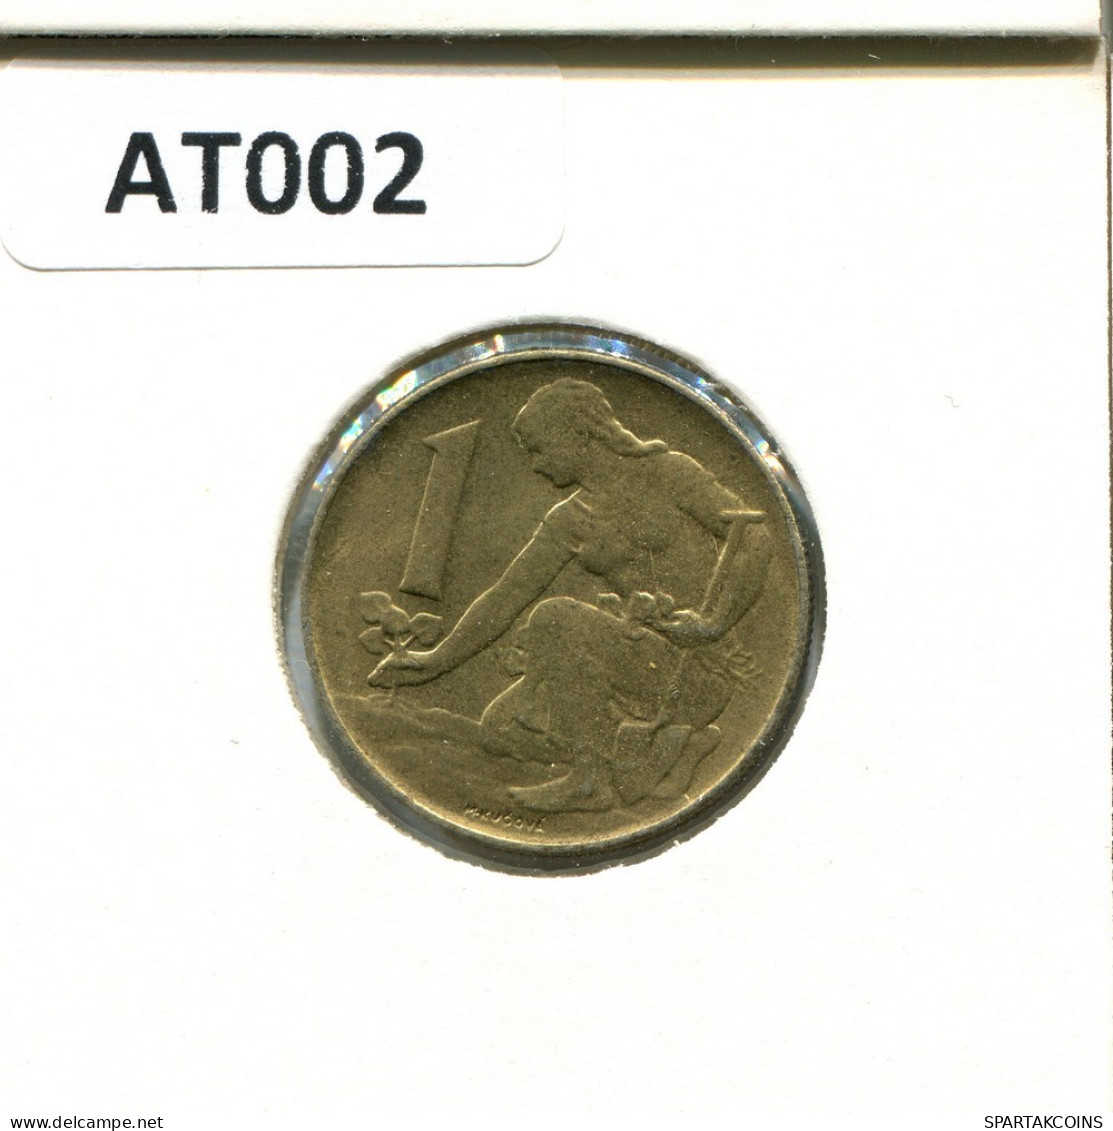 1 KORUNA 1992 CZECHOSLOVAKIA Coin #AT002.U.A - Cecoslovacchia